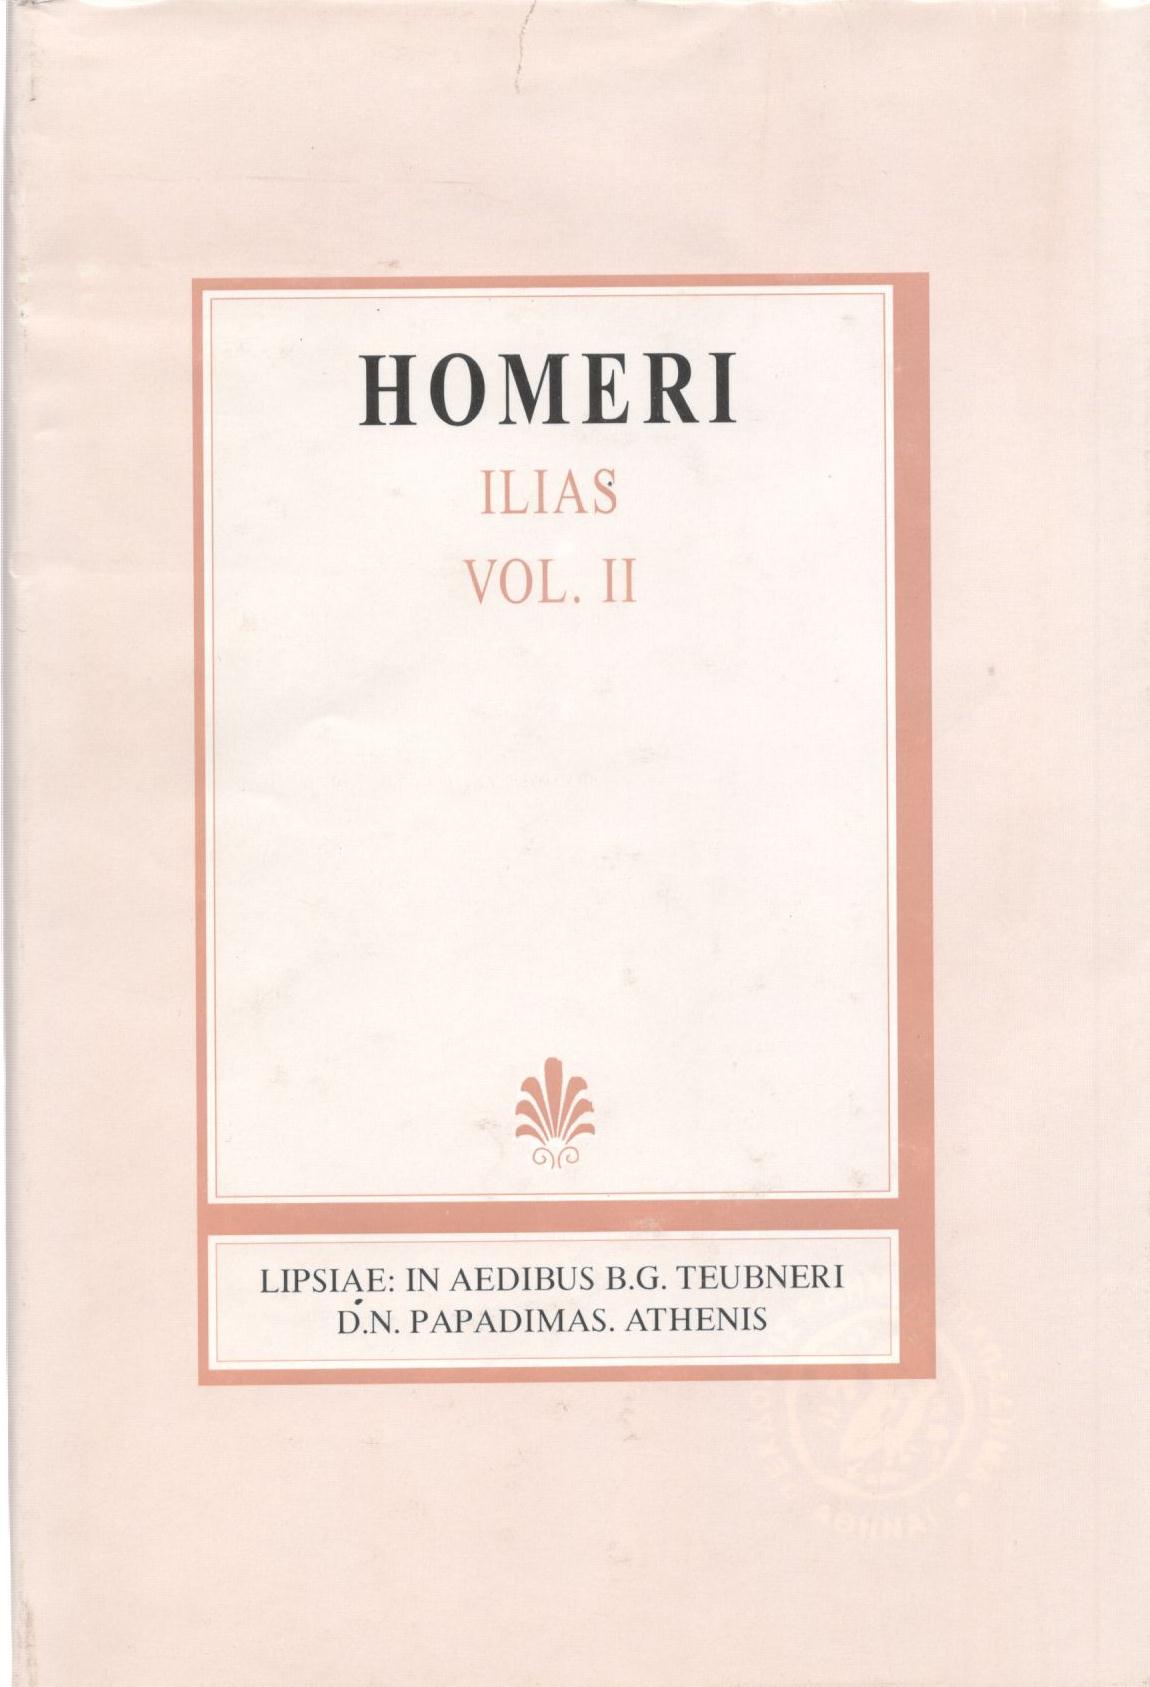 Homeri, Ilias, Vol. II, [Ομήρου, Ιλιάς, Ραψωδίαι Ν-Ω, τ. Β']